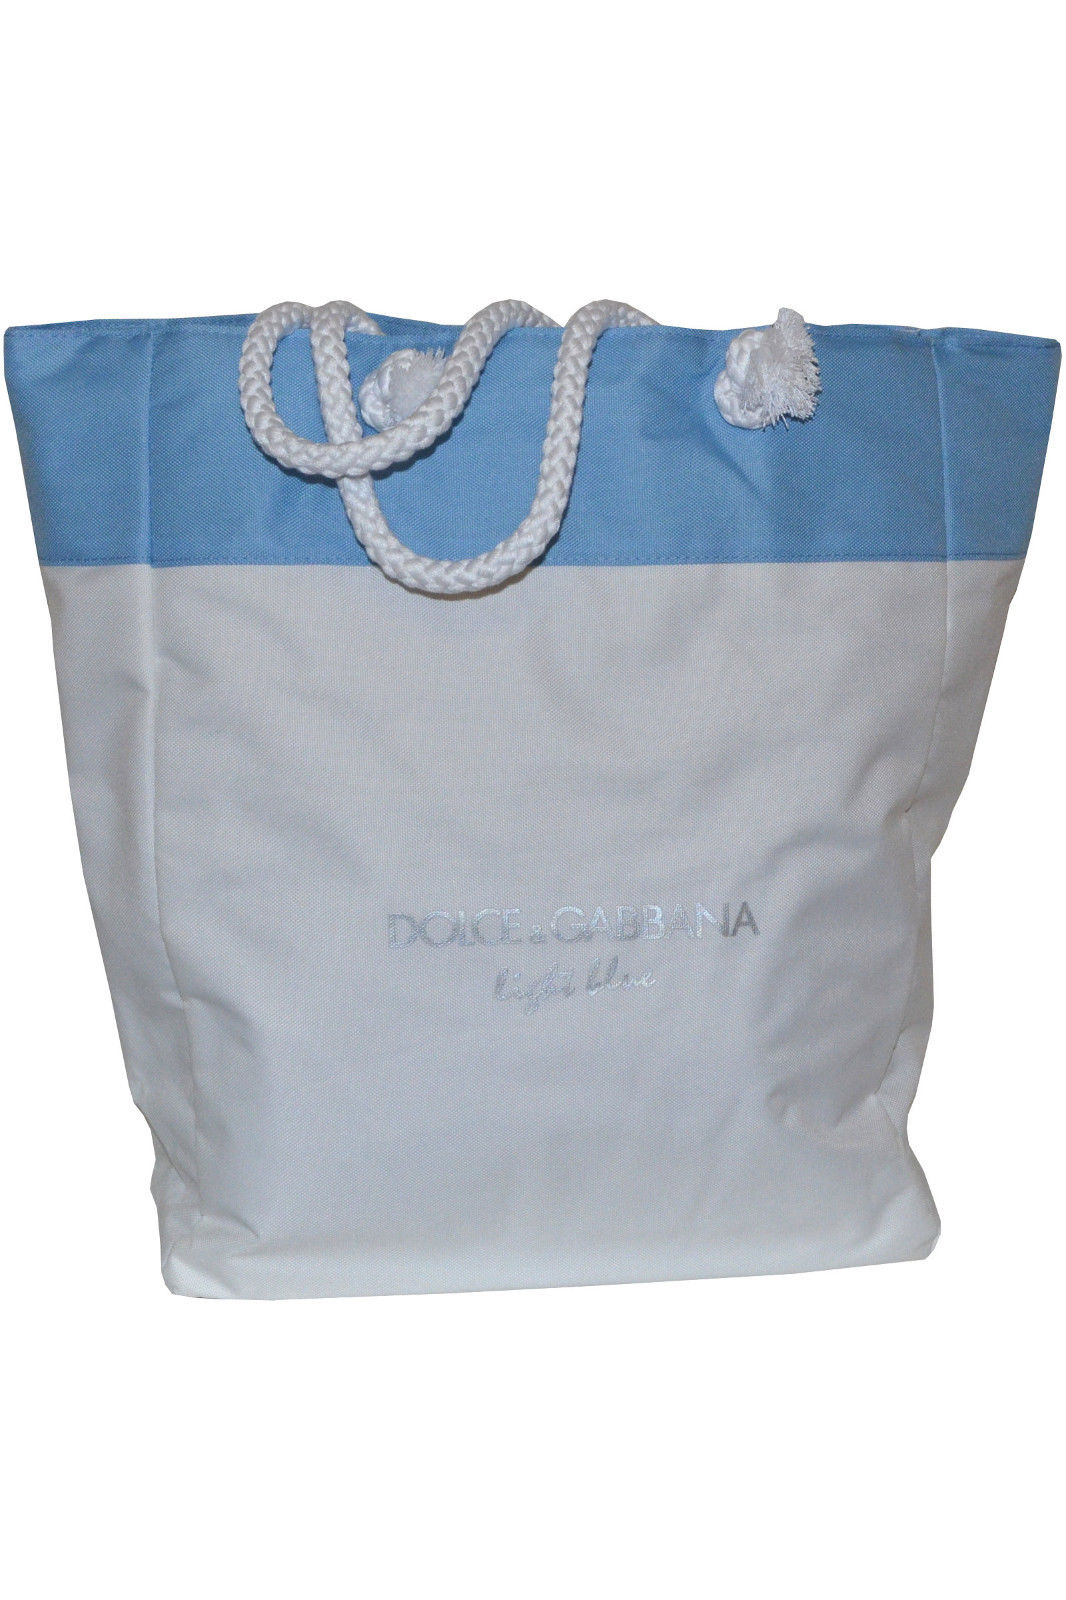 dolce and gabbana blue bag